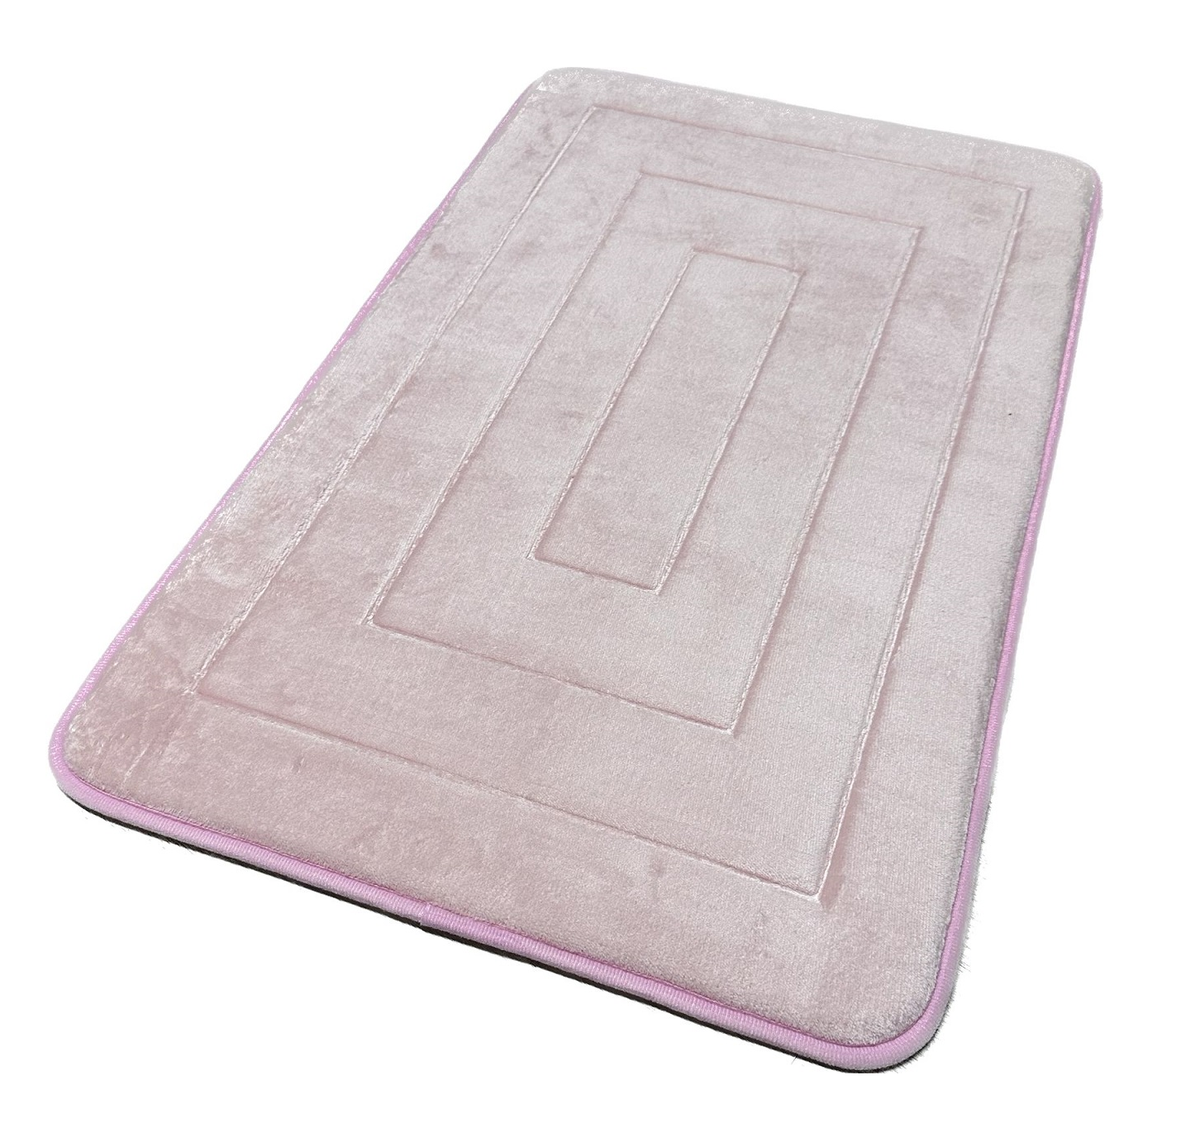 Bath mat memory foam 50 x 80 cm - TAME5080